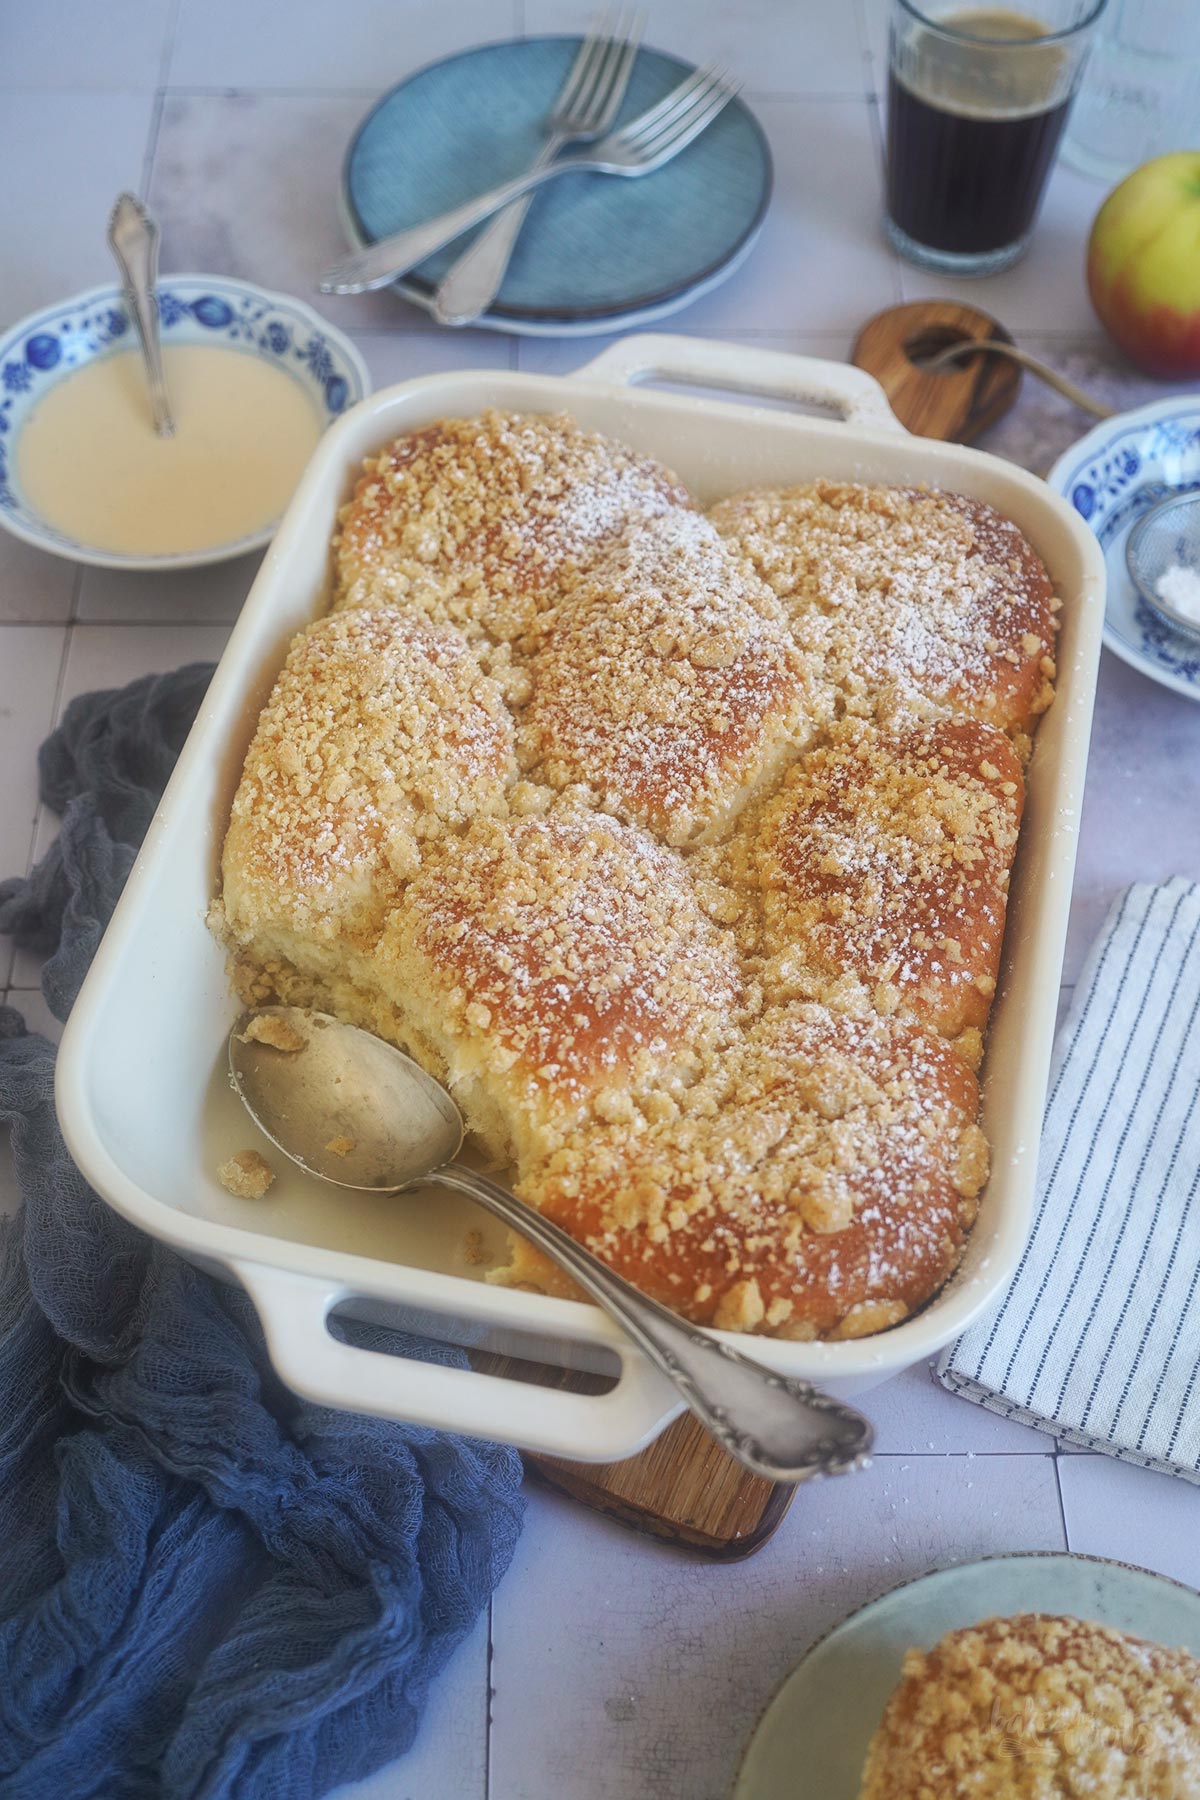 Apple Pie Buchteln mit Streuseln | Bake to the roots